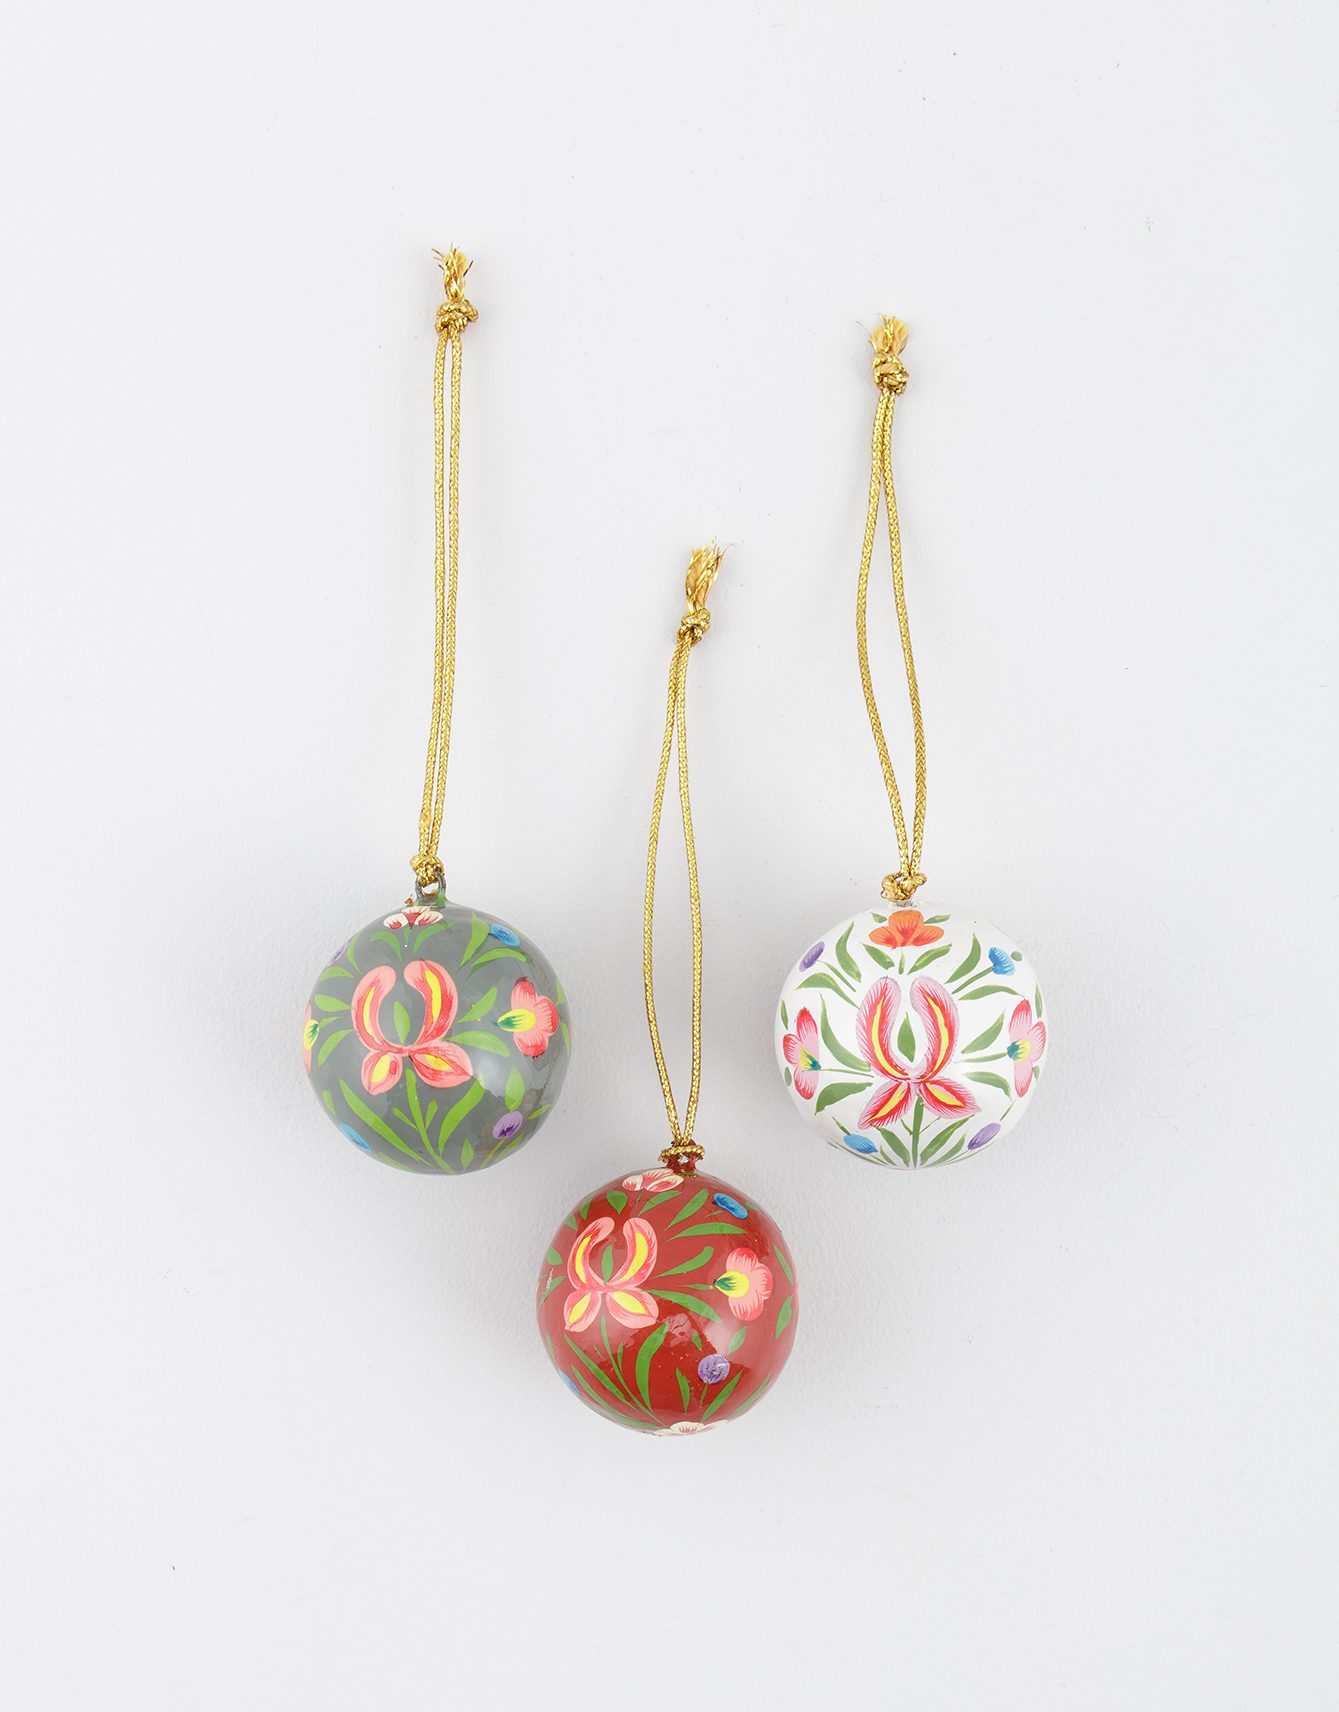 Handpainted ornaments